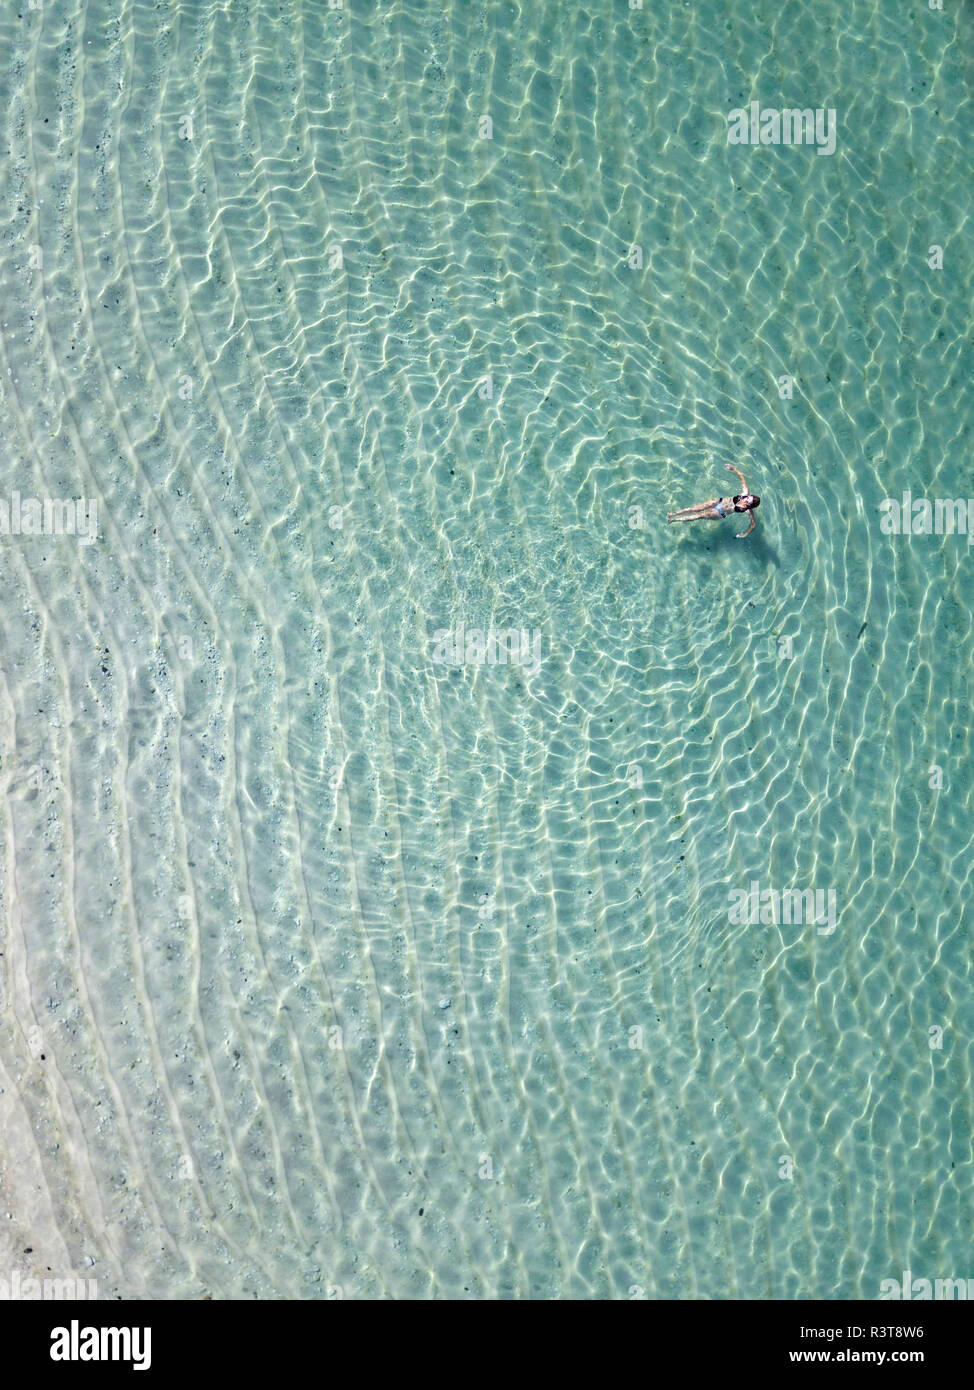 Indonesia, Bali, Melasti, vista aerea del Karma Kandara beach, donna in acqua Foto Stock